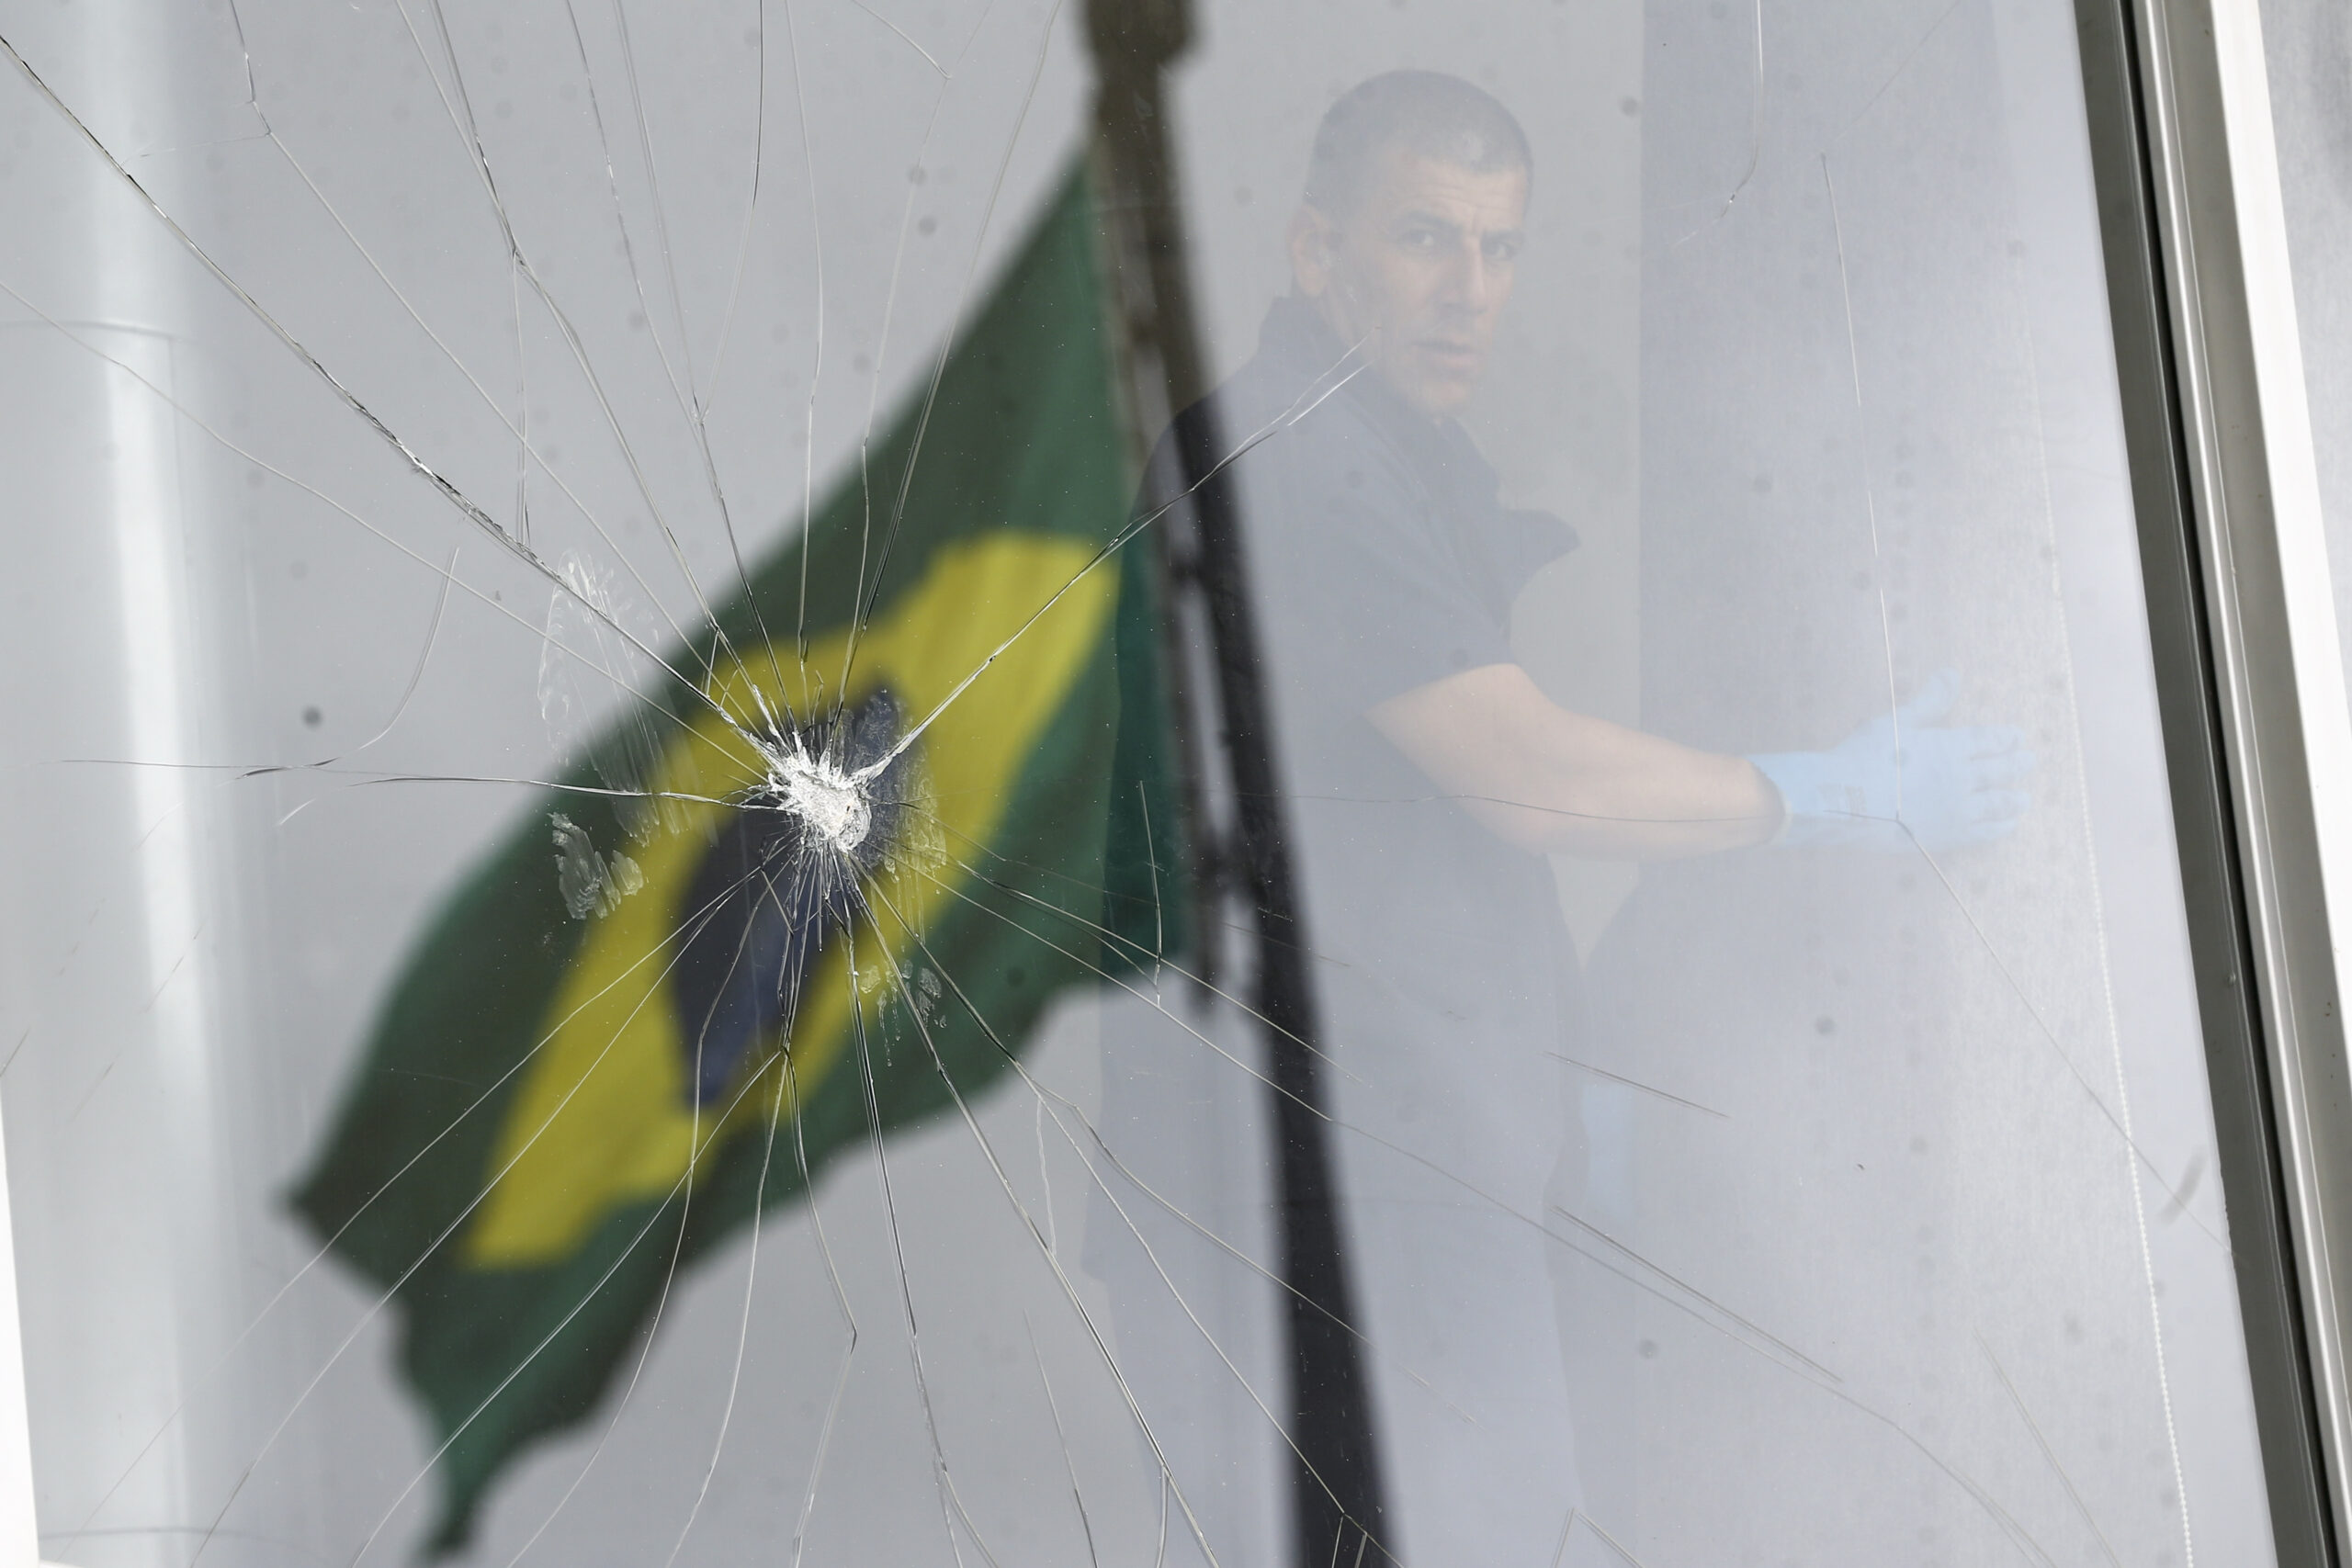 Damaged windows at the Planalto Palace. Photo: Marcelo Camargo/Agência Brasil 